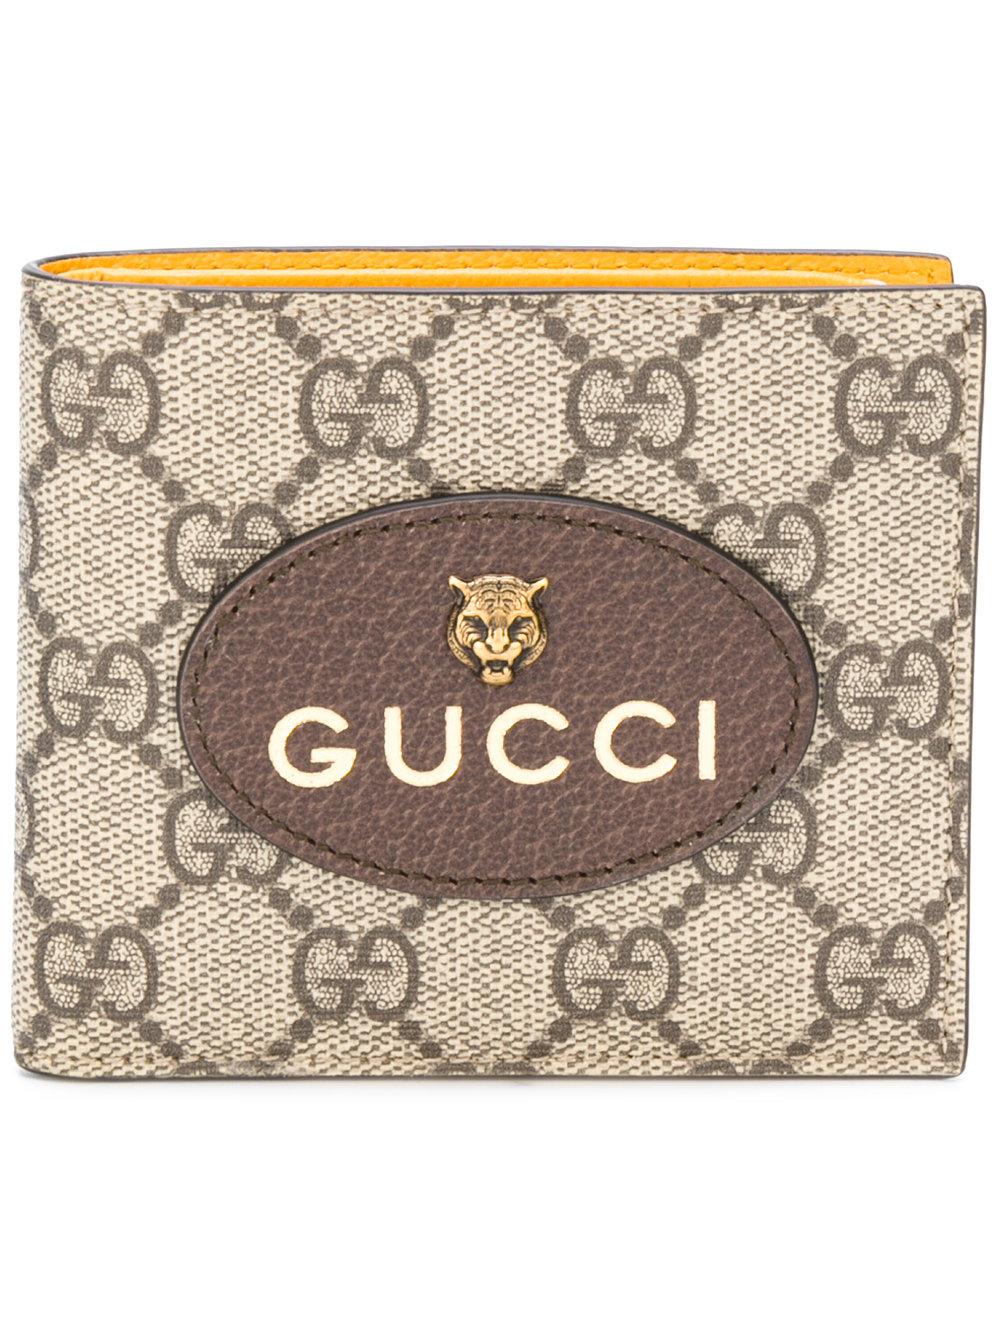 Gucci Neo Vintage Gg Supreme Wallet for Men - Lyst